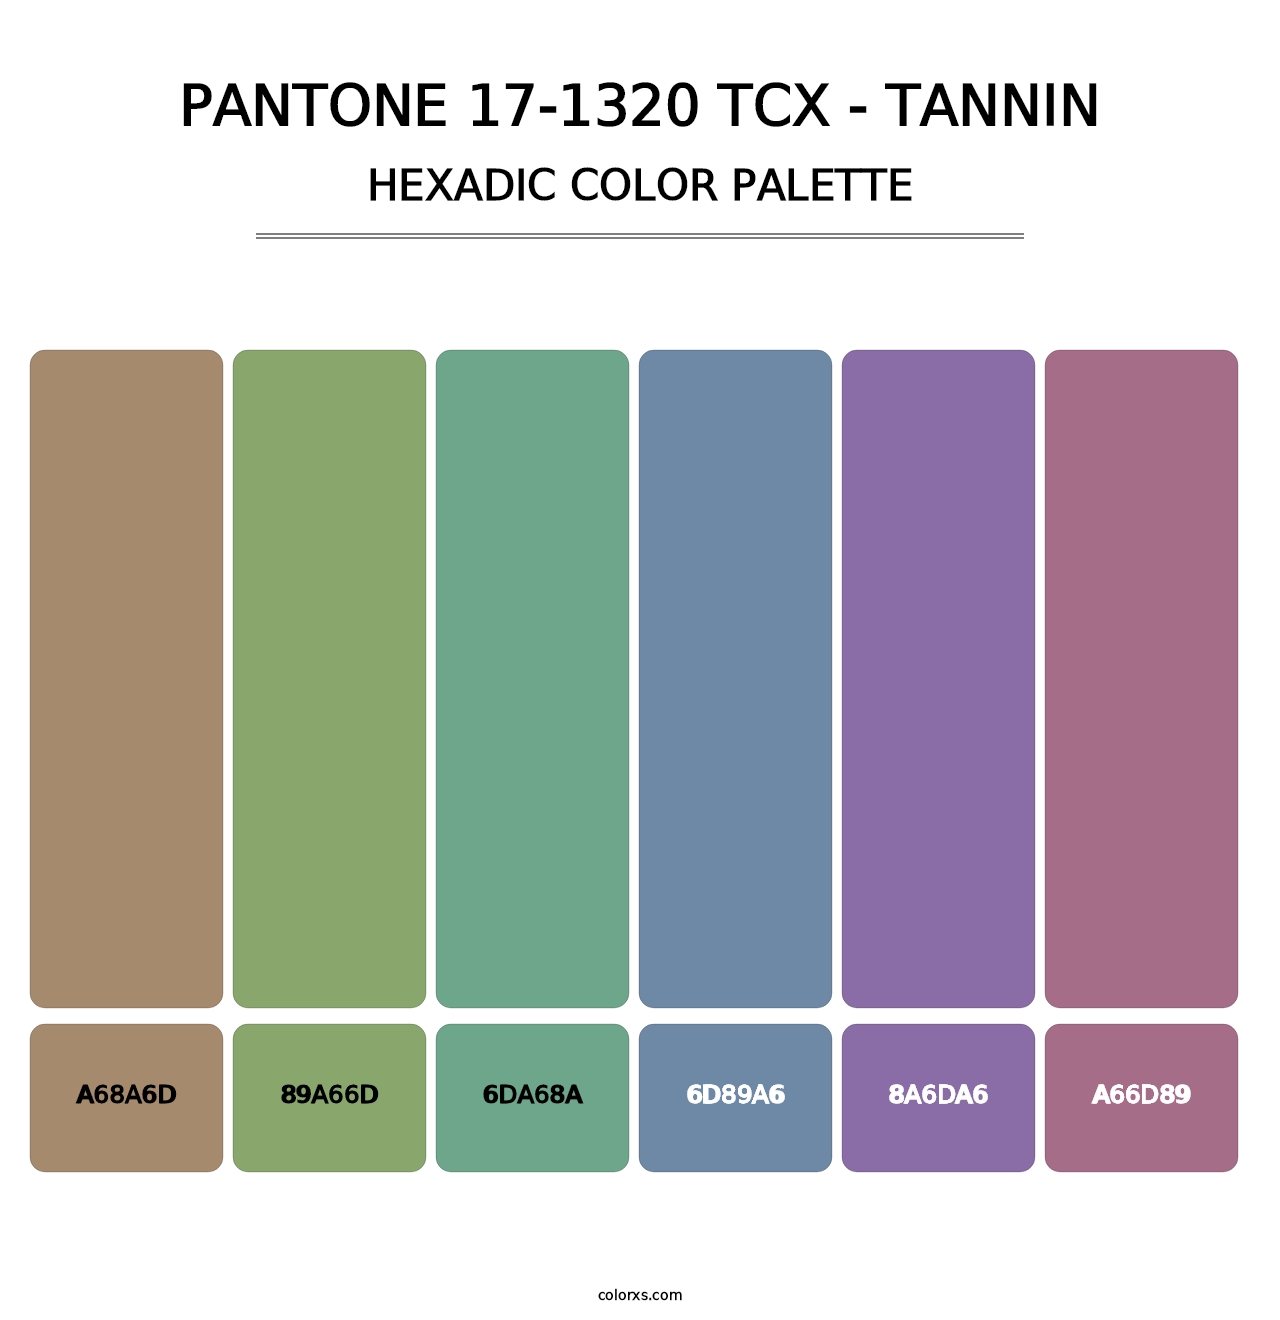 PANTONE 17-1320 TCX - Tannin - Hexadic Color Palette